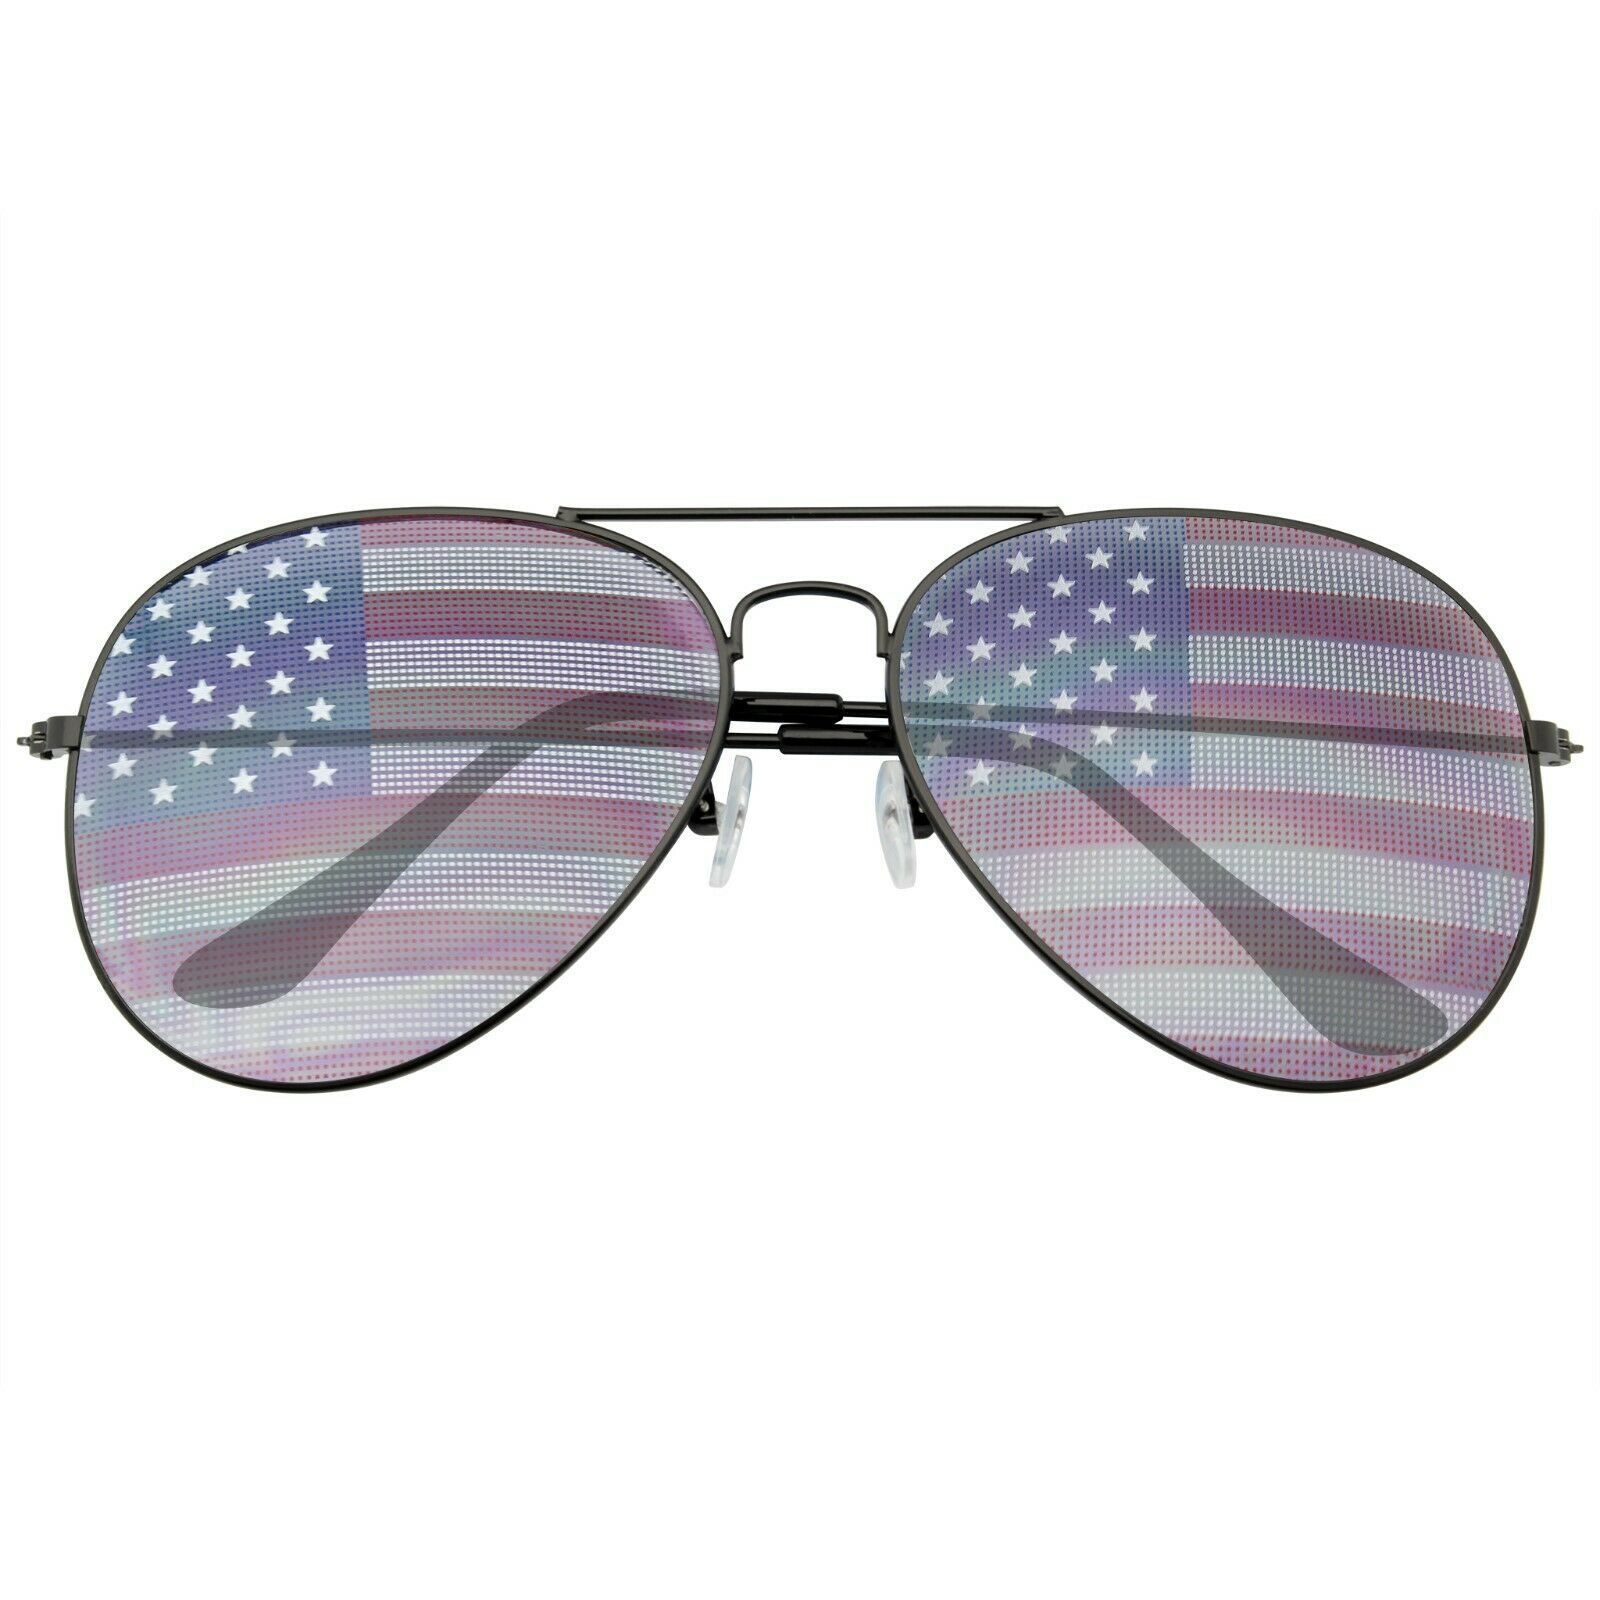 Sunglasses Mens Womens Retro Vintage Party Festival Patriotic American Flag